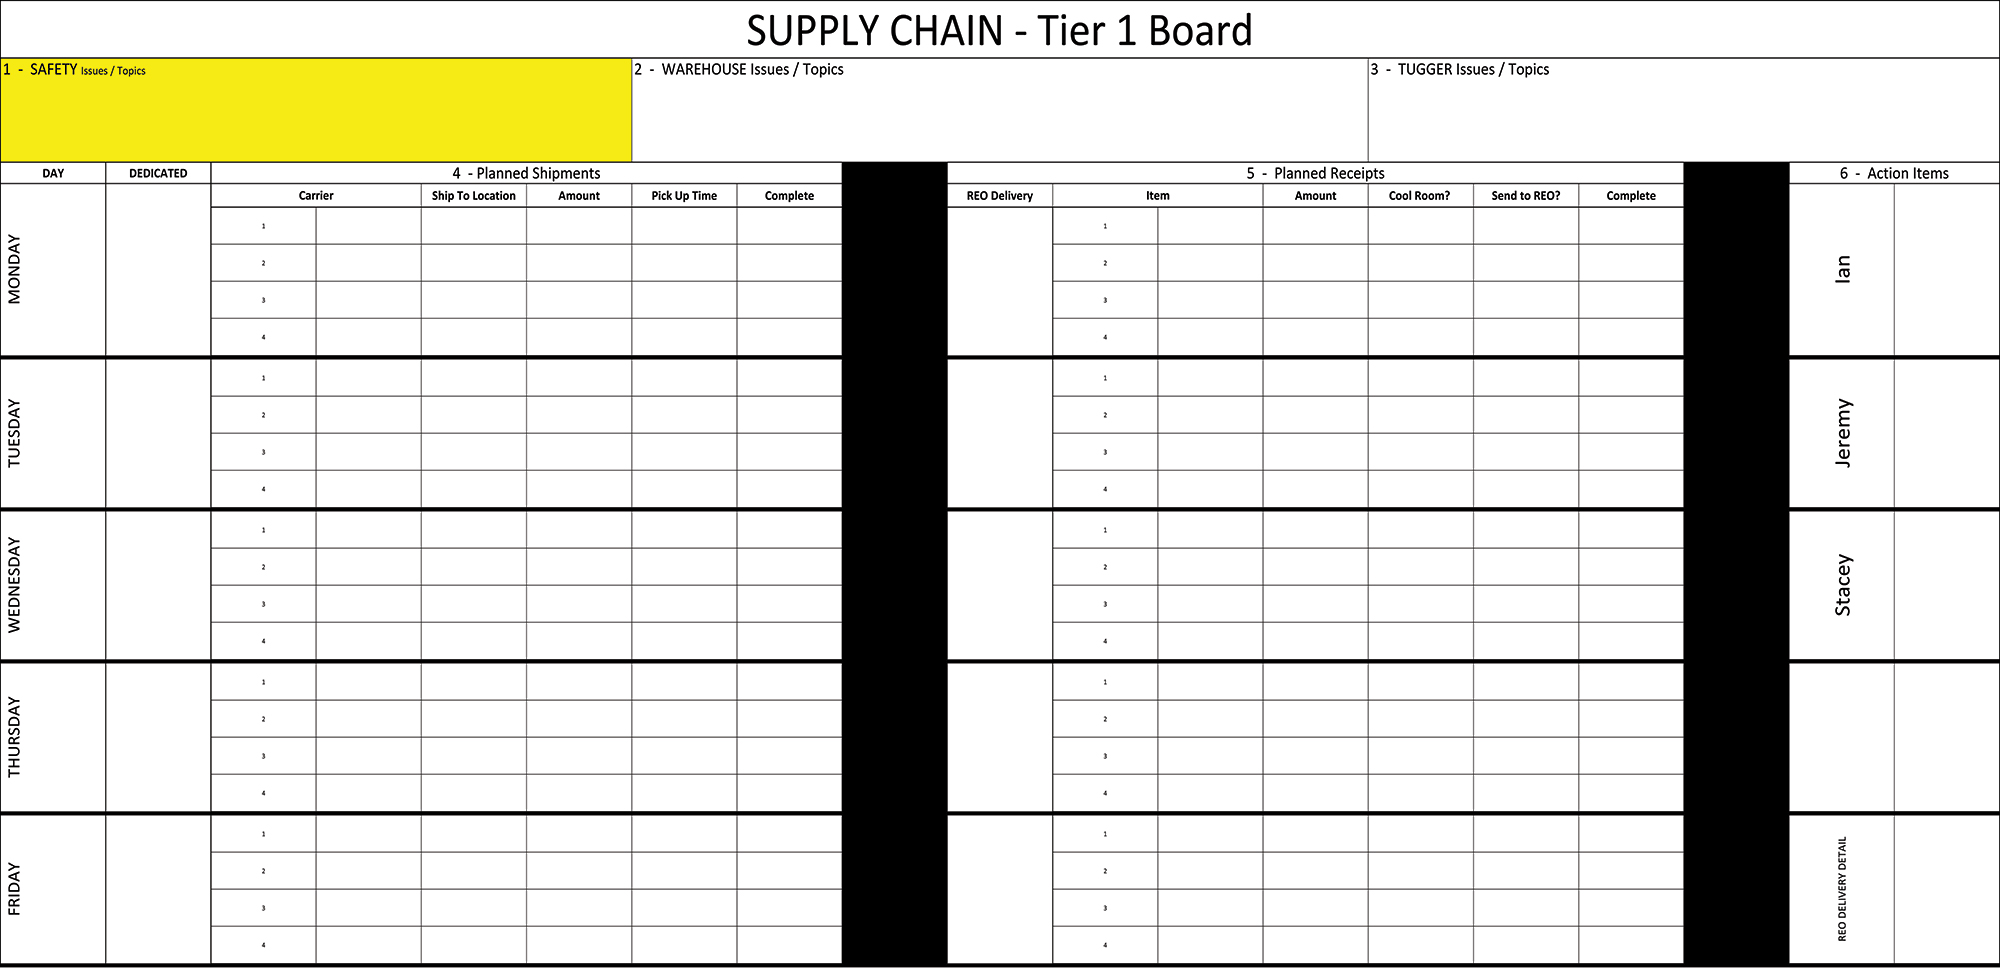 supply-chain-tier-1-board-93x45-c.jpg